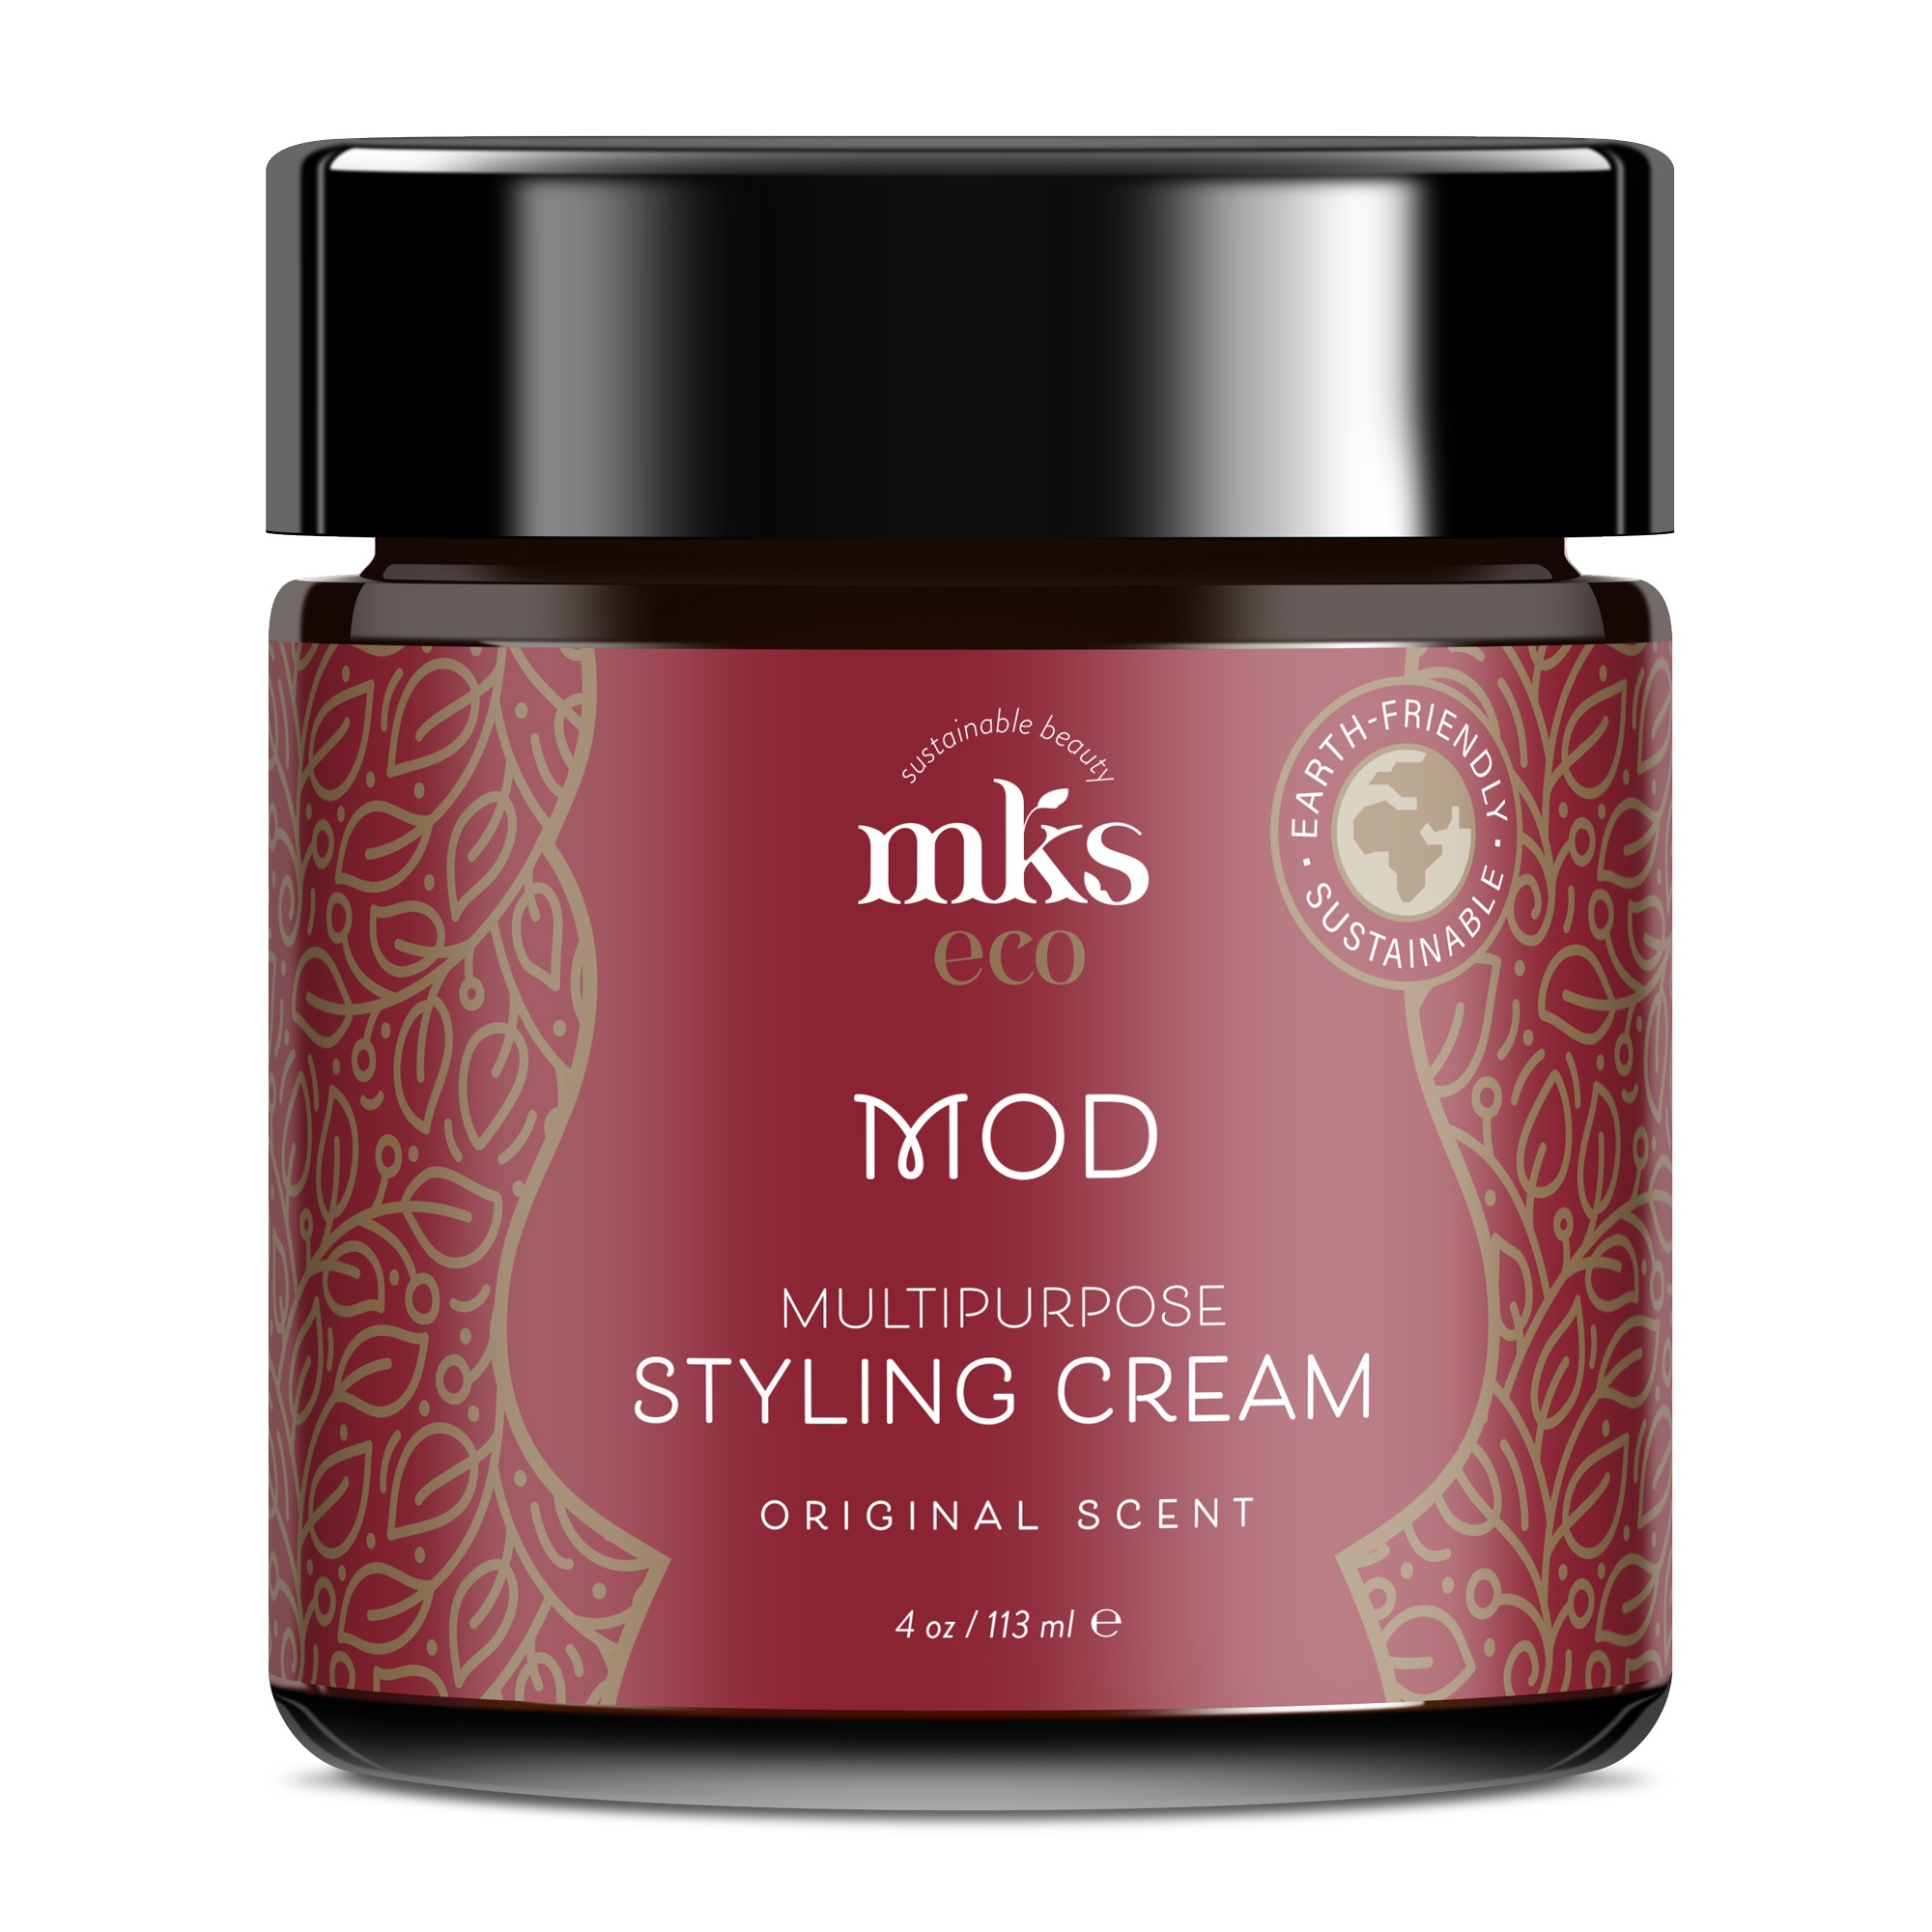 MKS eco Styling: Mod Multipurpose Styling Cream - Original Scent